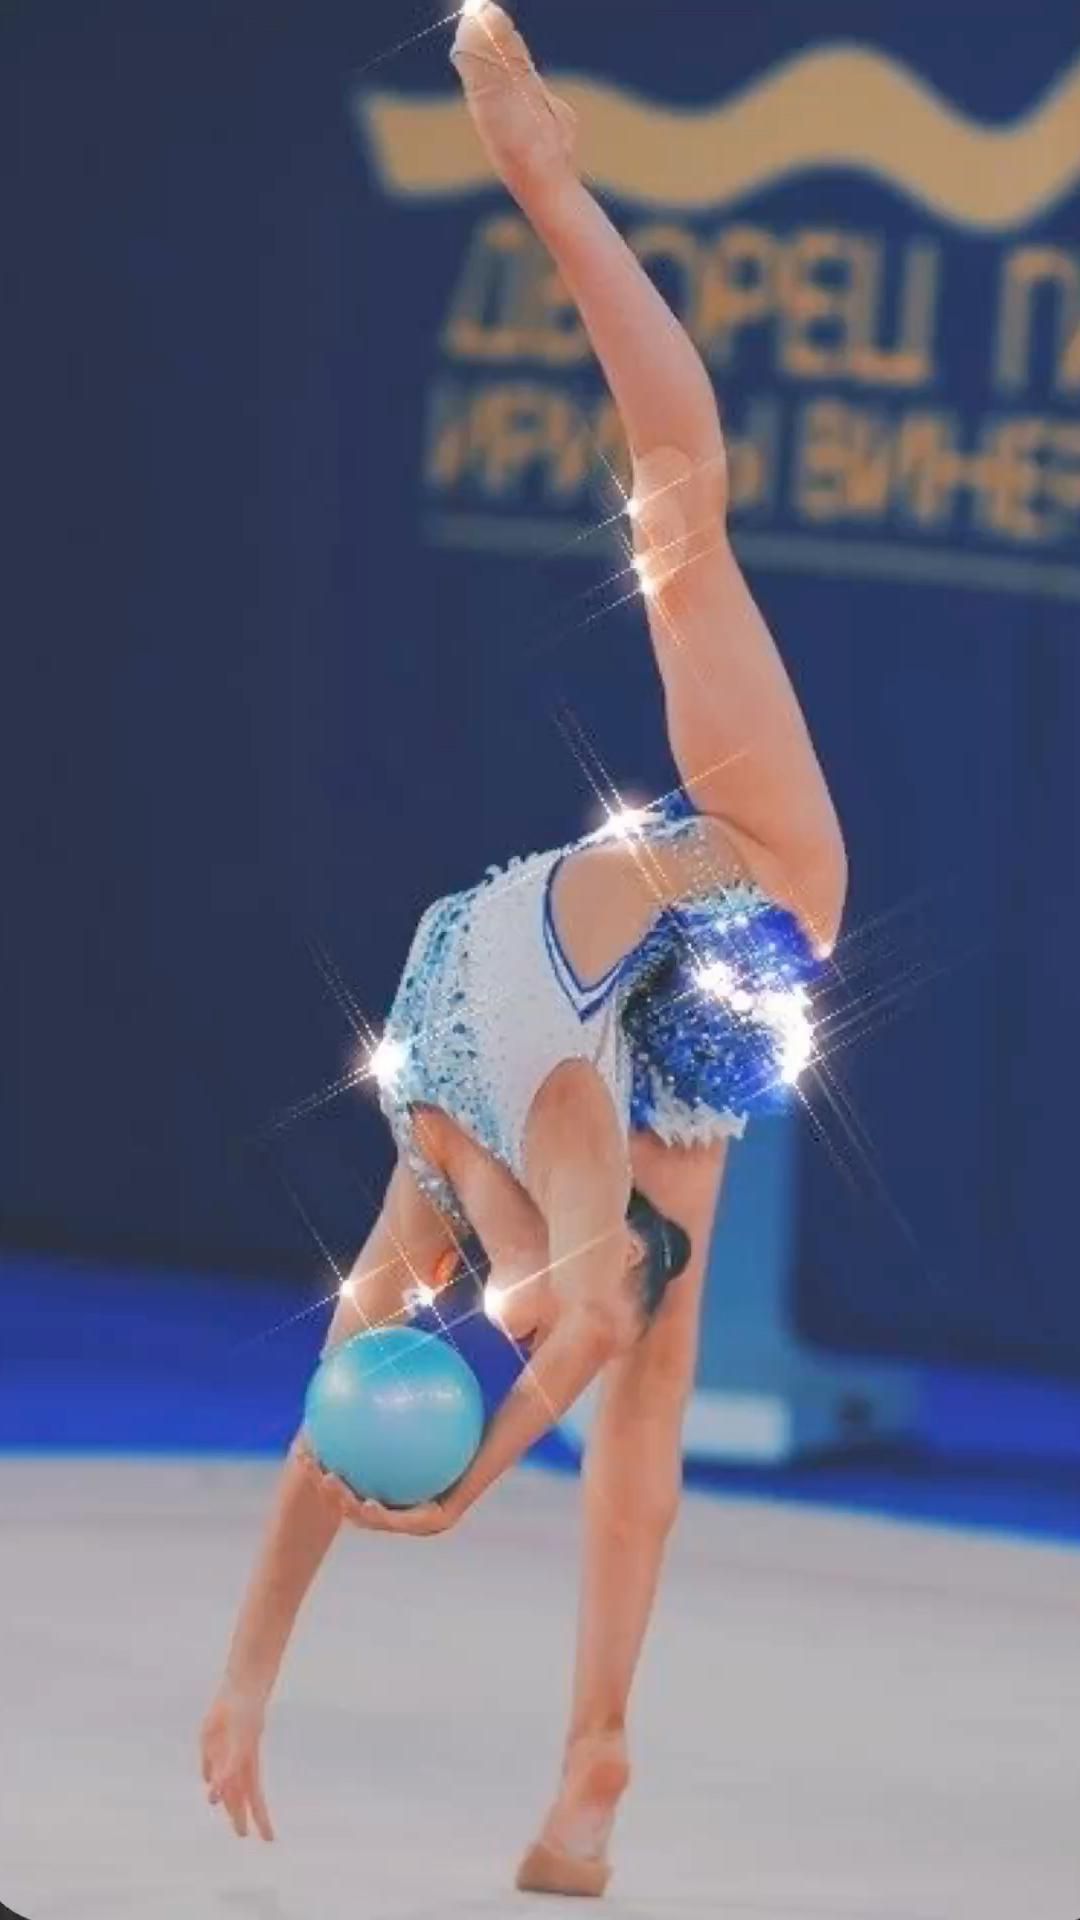 A gymnast performing with a ball - Gymnastics